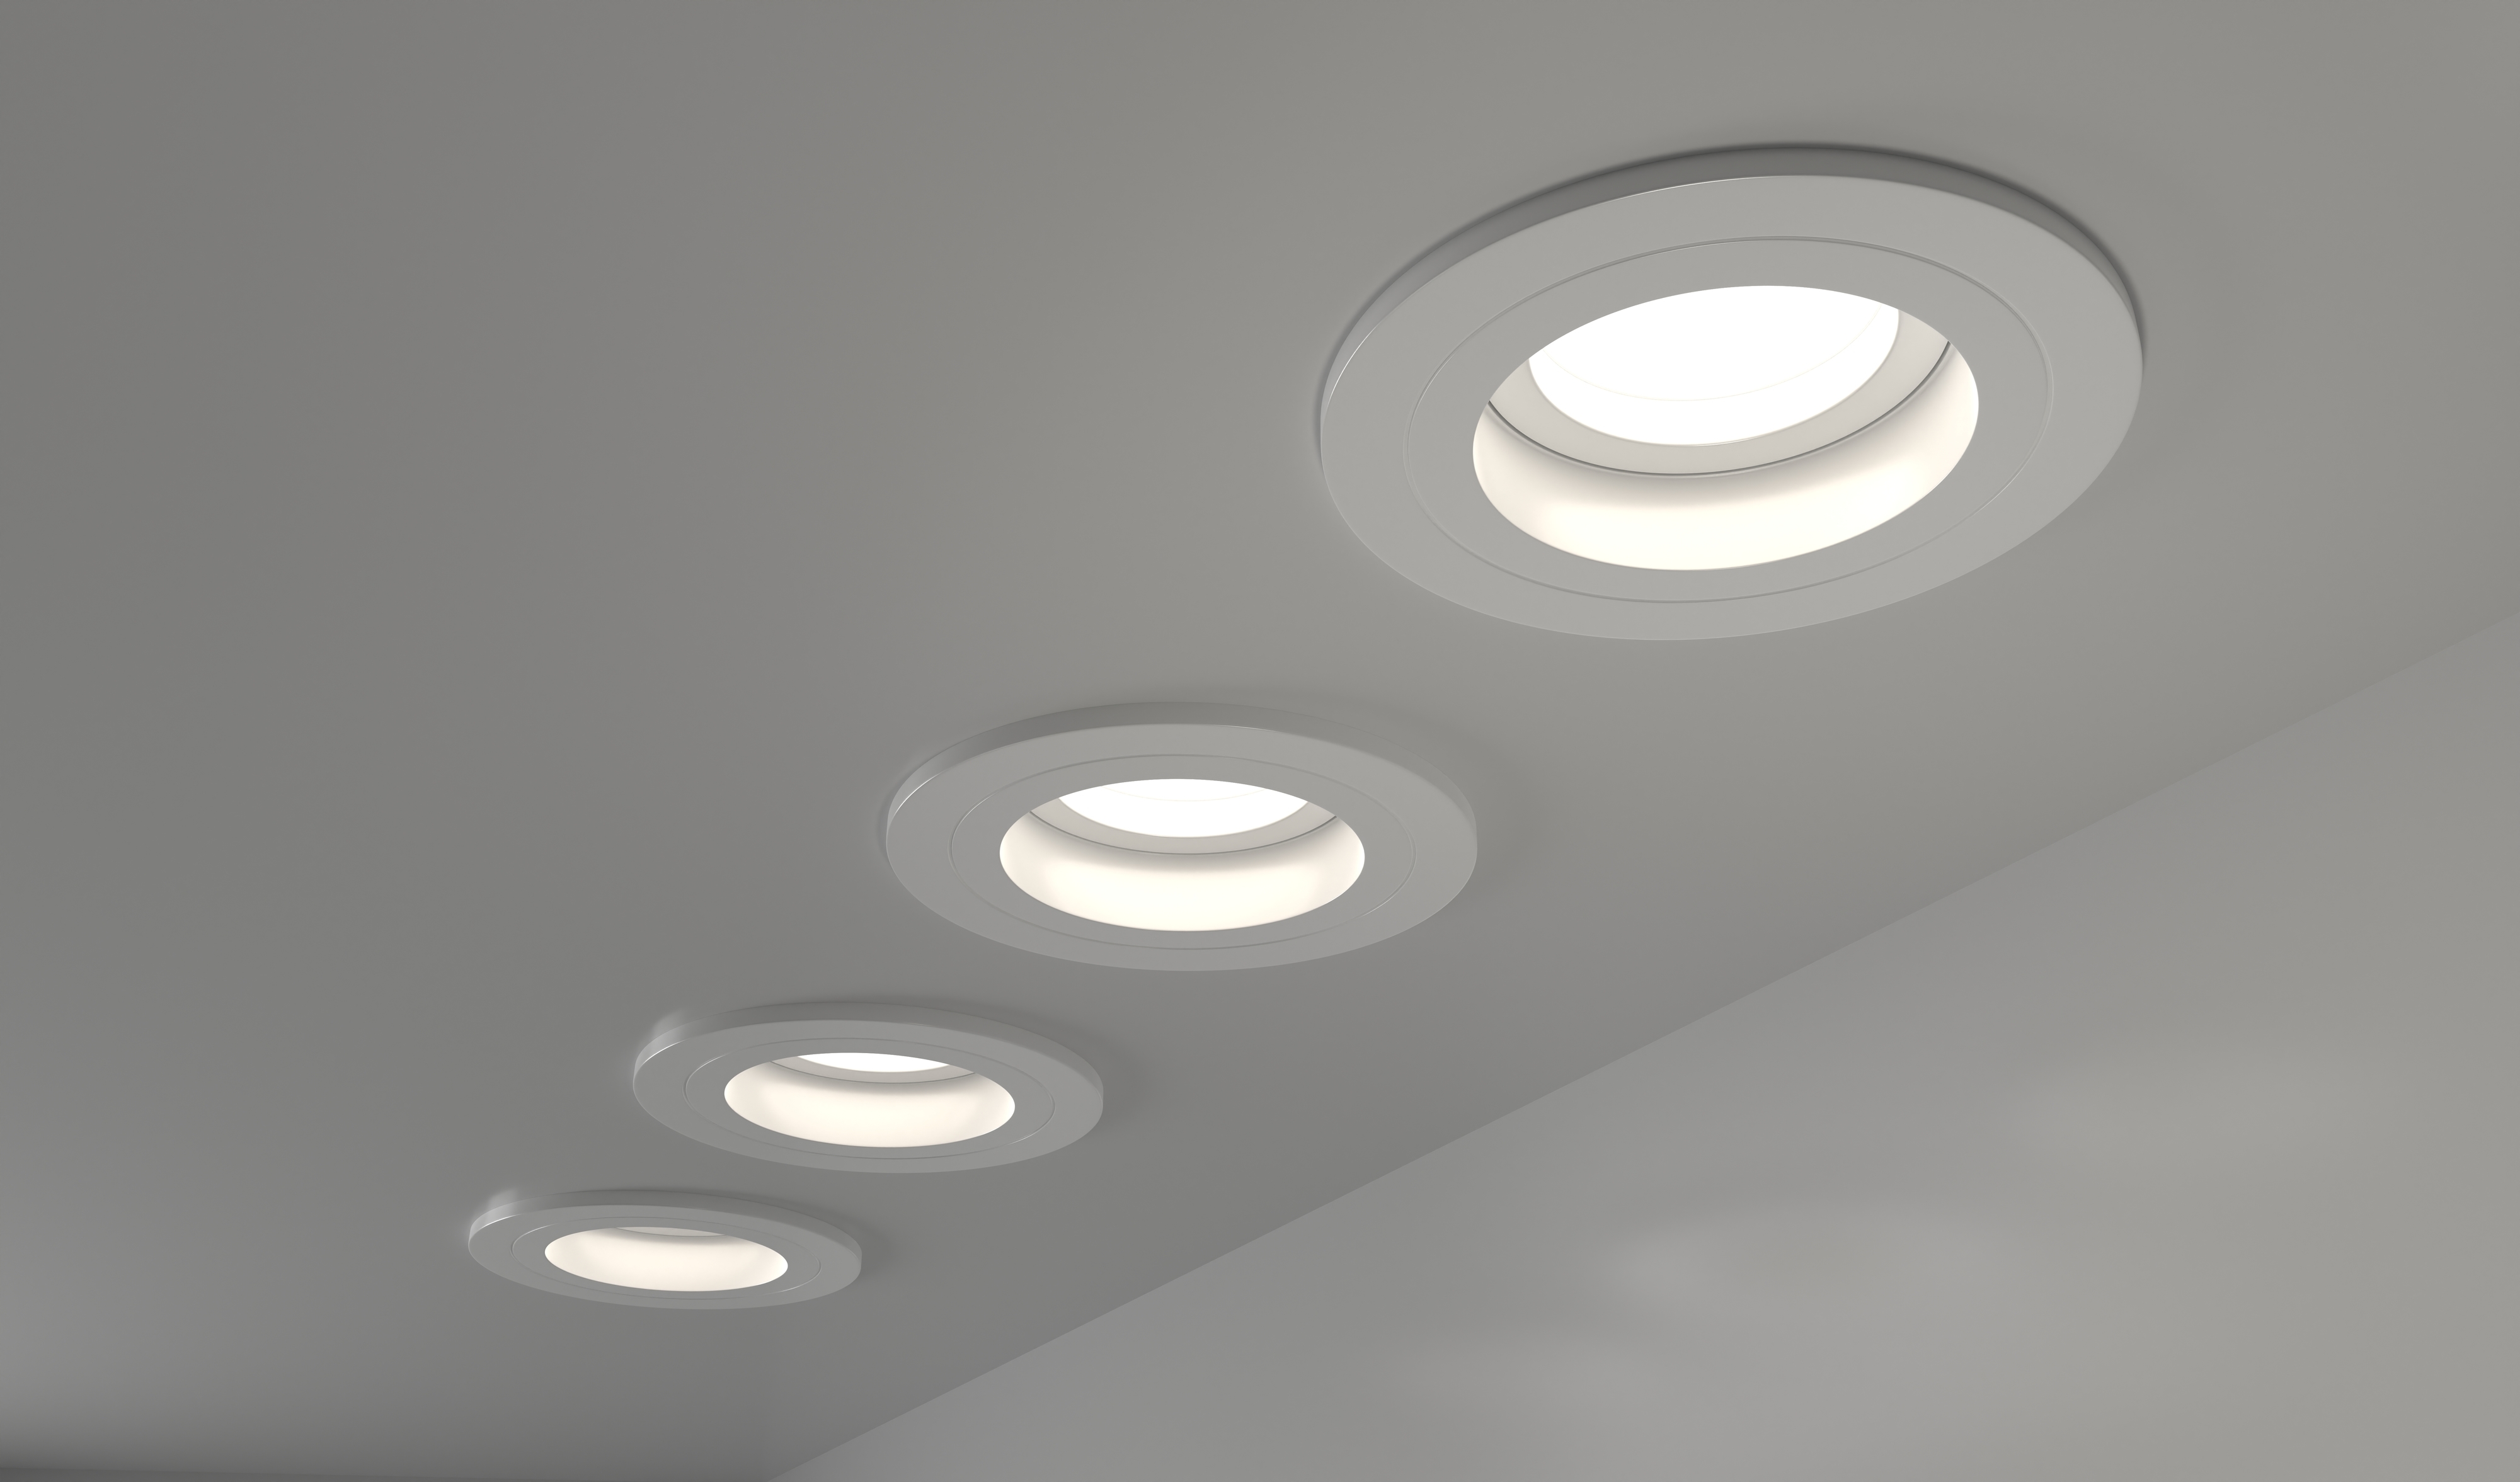 Five recessed lighting fixtures set in a ceiling, providing interior illumination